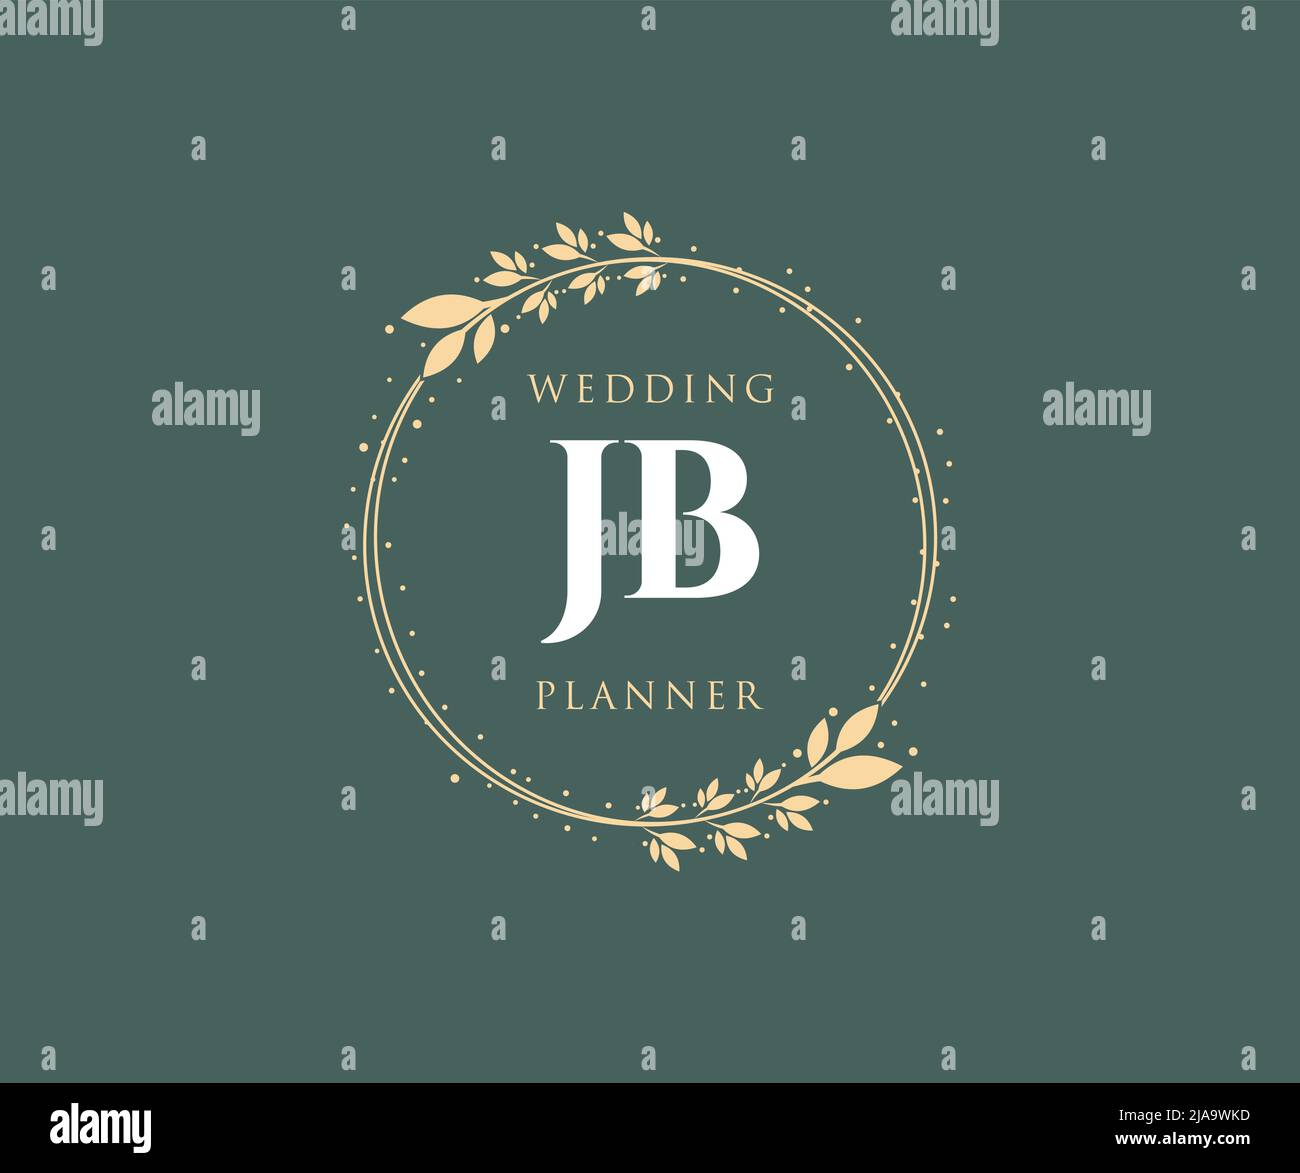 JB Initials letter Wedding monogram logos collection, hand drawn